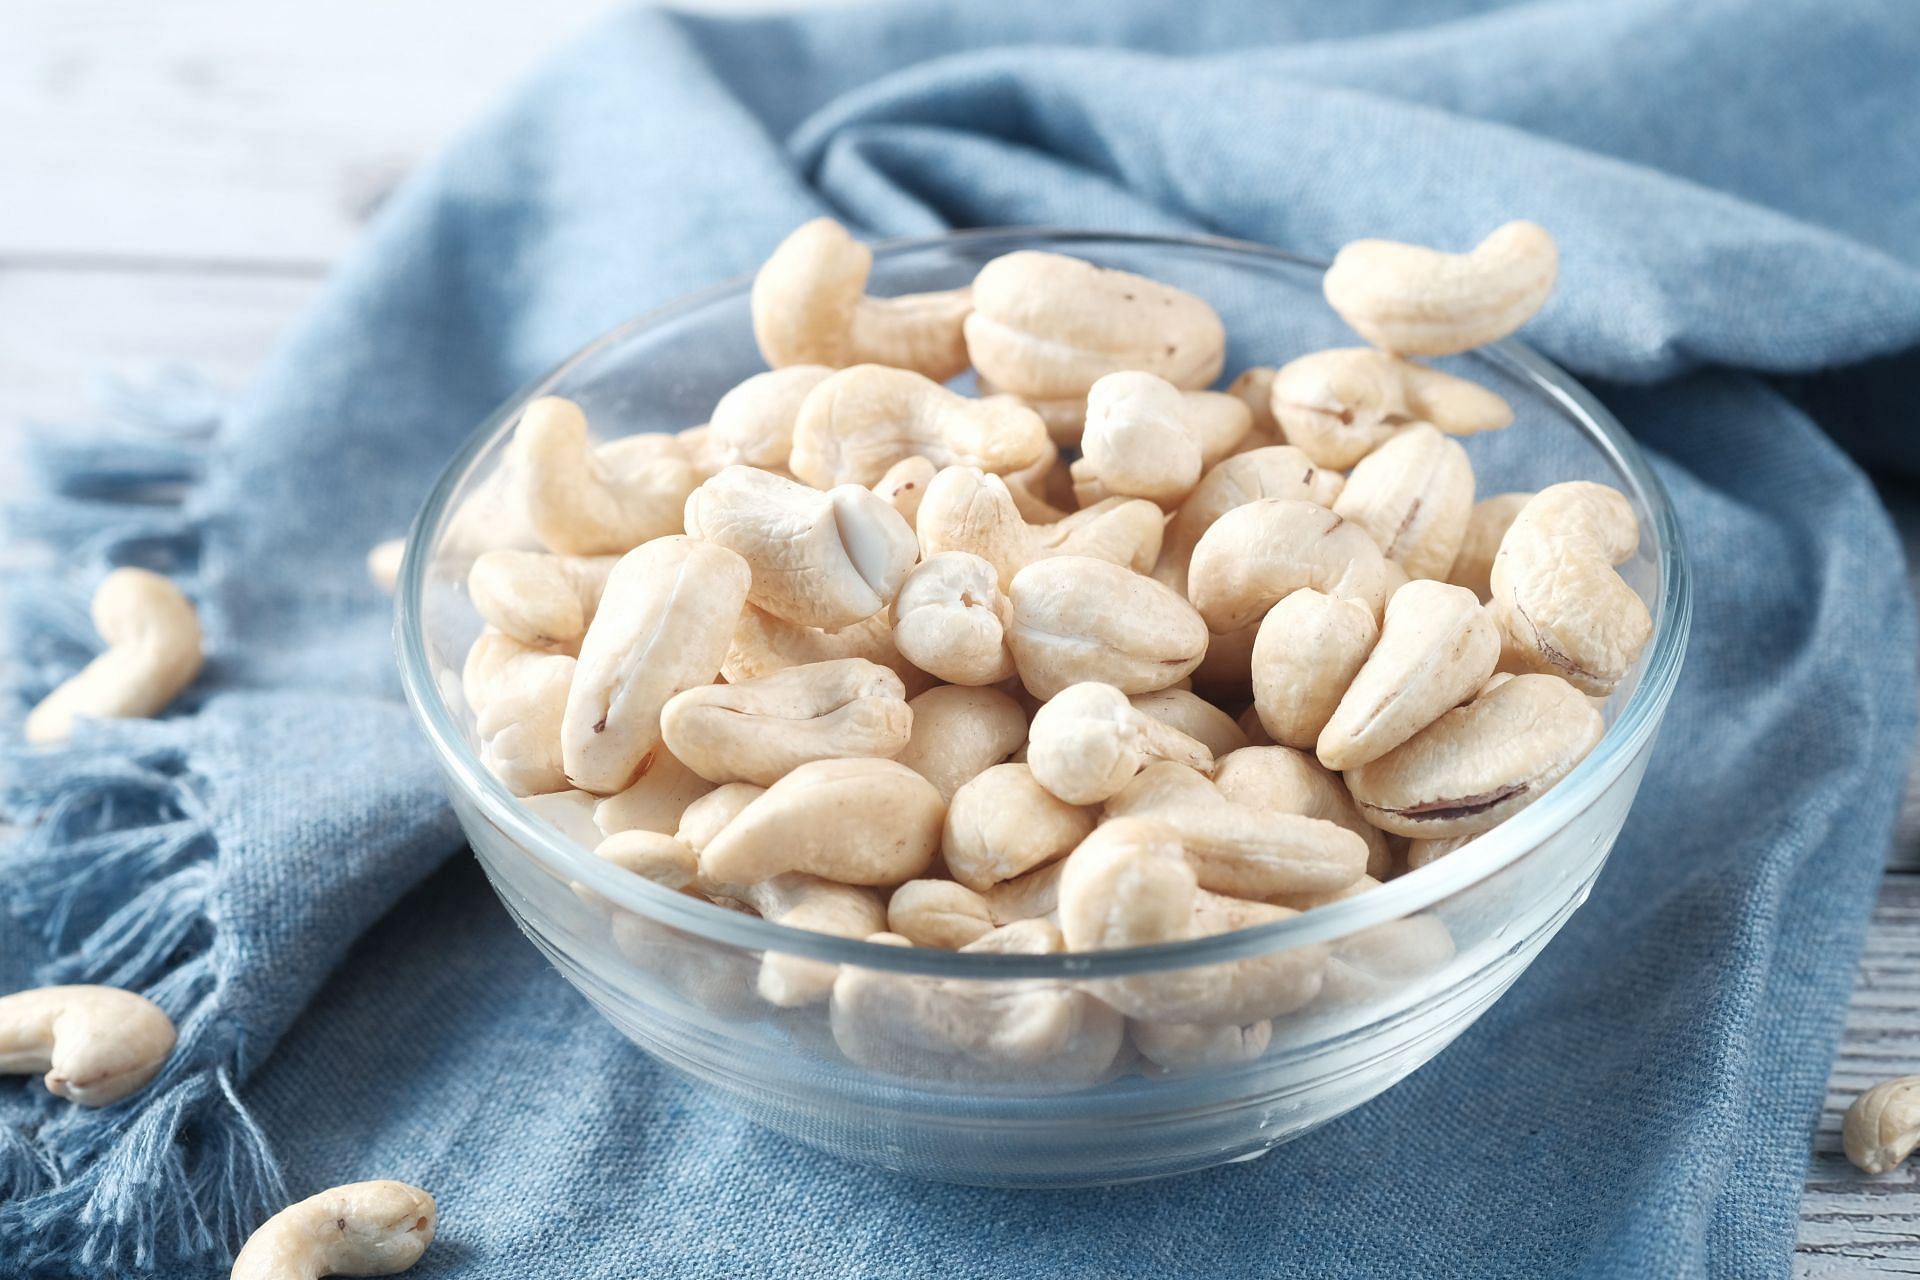 The fantastic nutritional profile makes cashews good for you. (Image via Unsplash/ Towfiqu Barbhuiya)